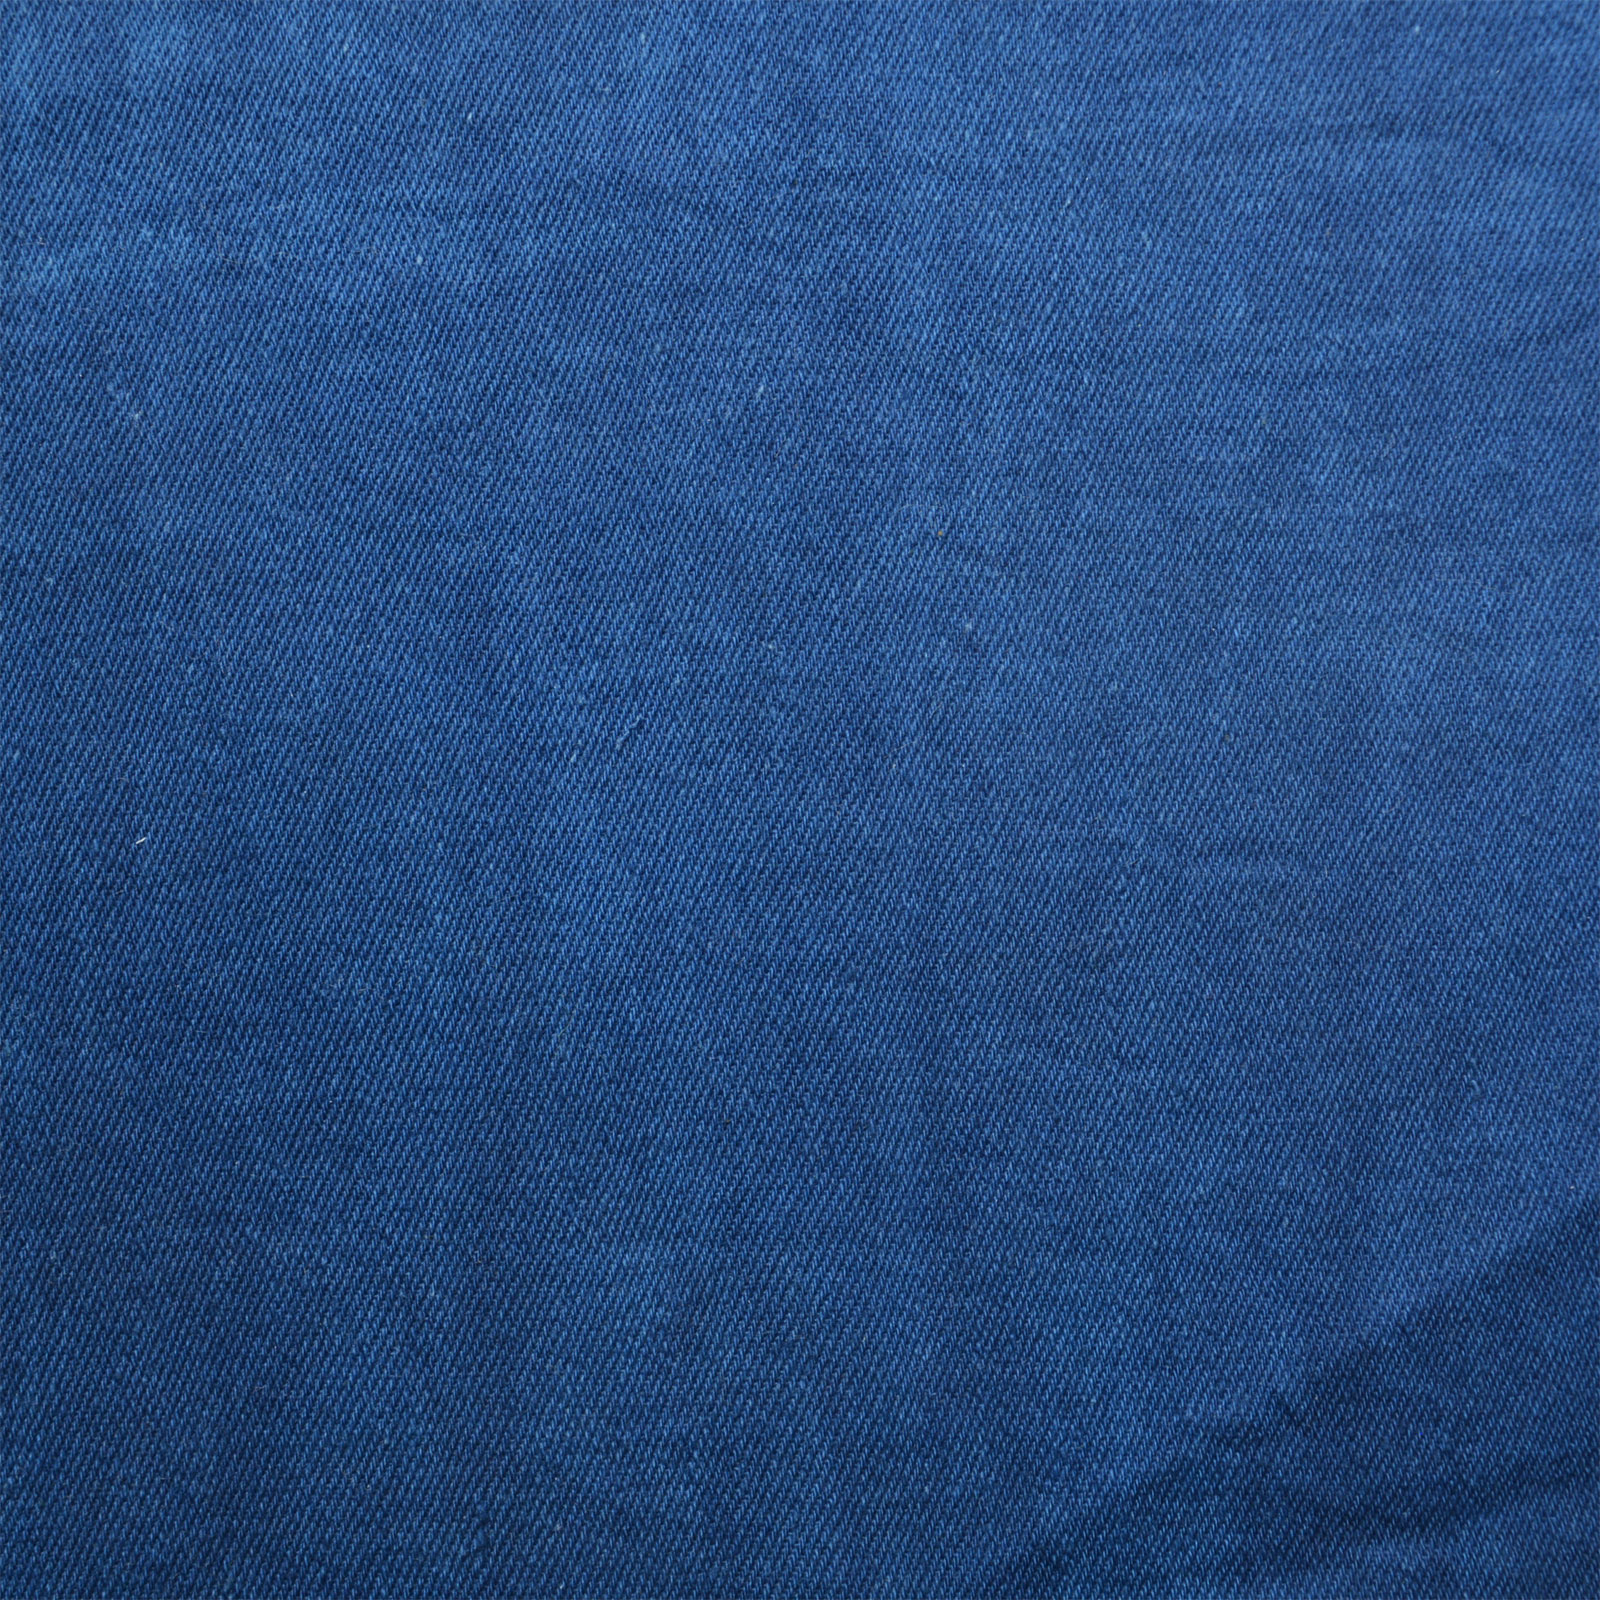 Medium Weight Handloom Selvedge Denim 6.5 Oz - Oxford Blue - Natural Indigo - Fabric Dyed